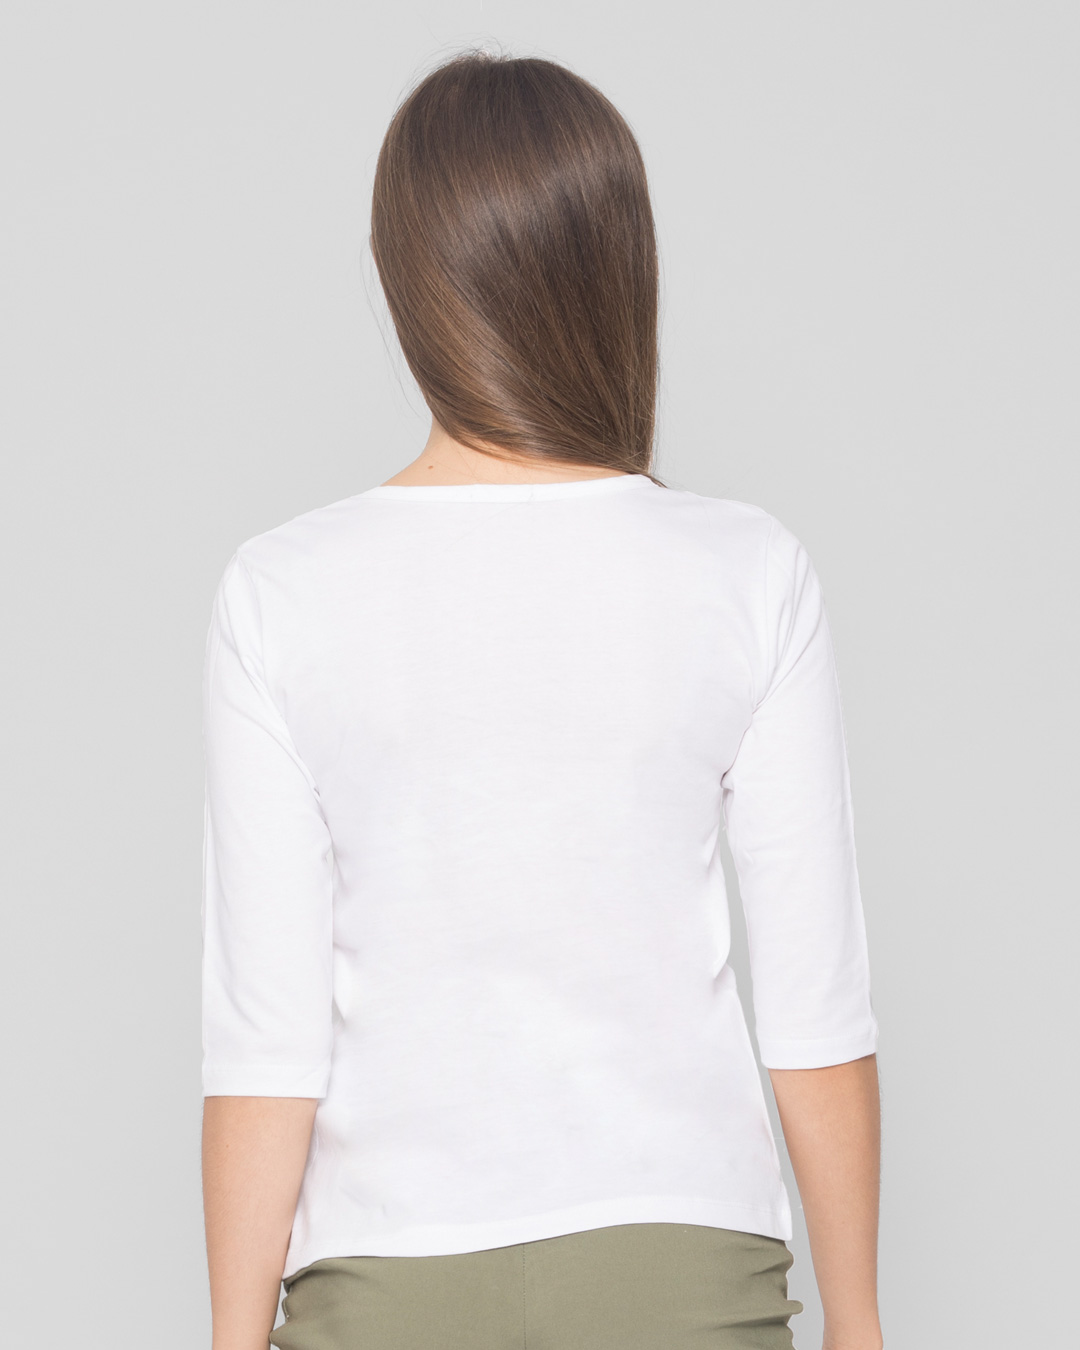 Shop Tweety Origami Round Neck 3/4th Sleeve T-Shirt (LTL) White-Back